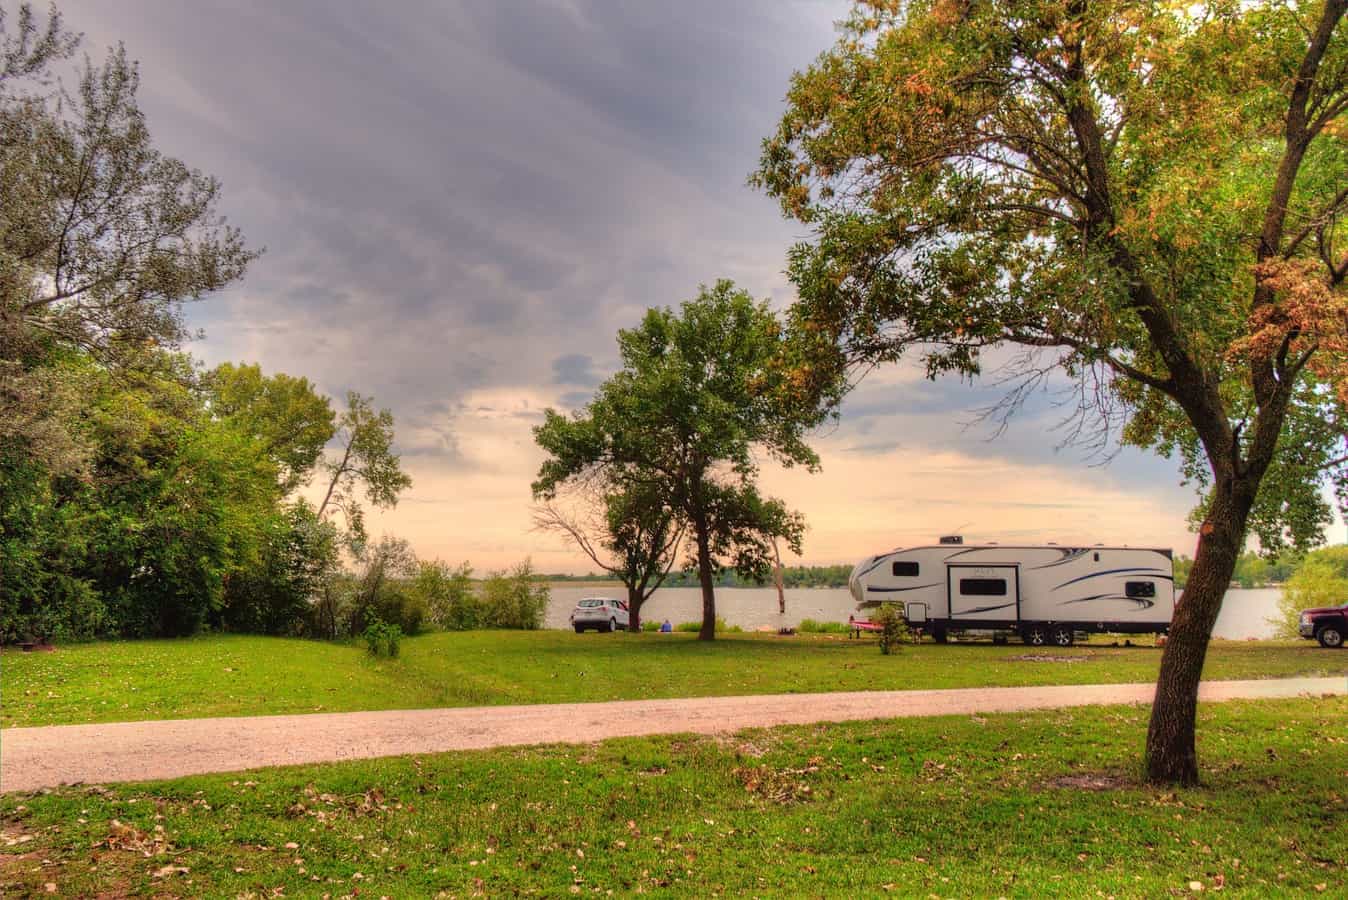 11 Unforgettable RV Camp Spots in Nebraska (Both Parks and Rustic) - Camper Report